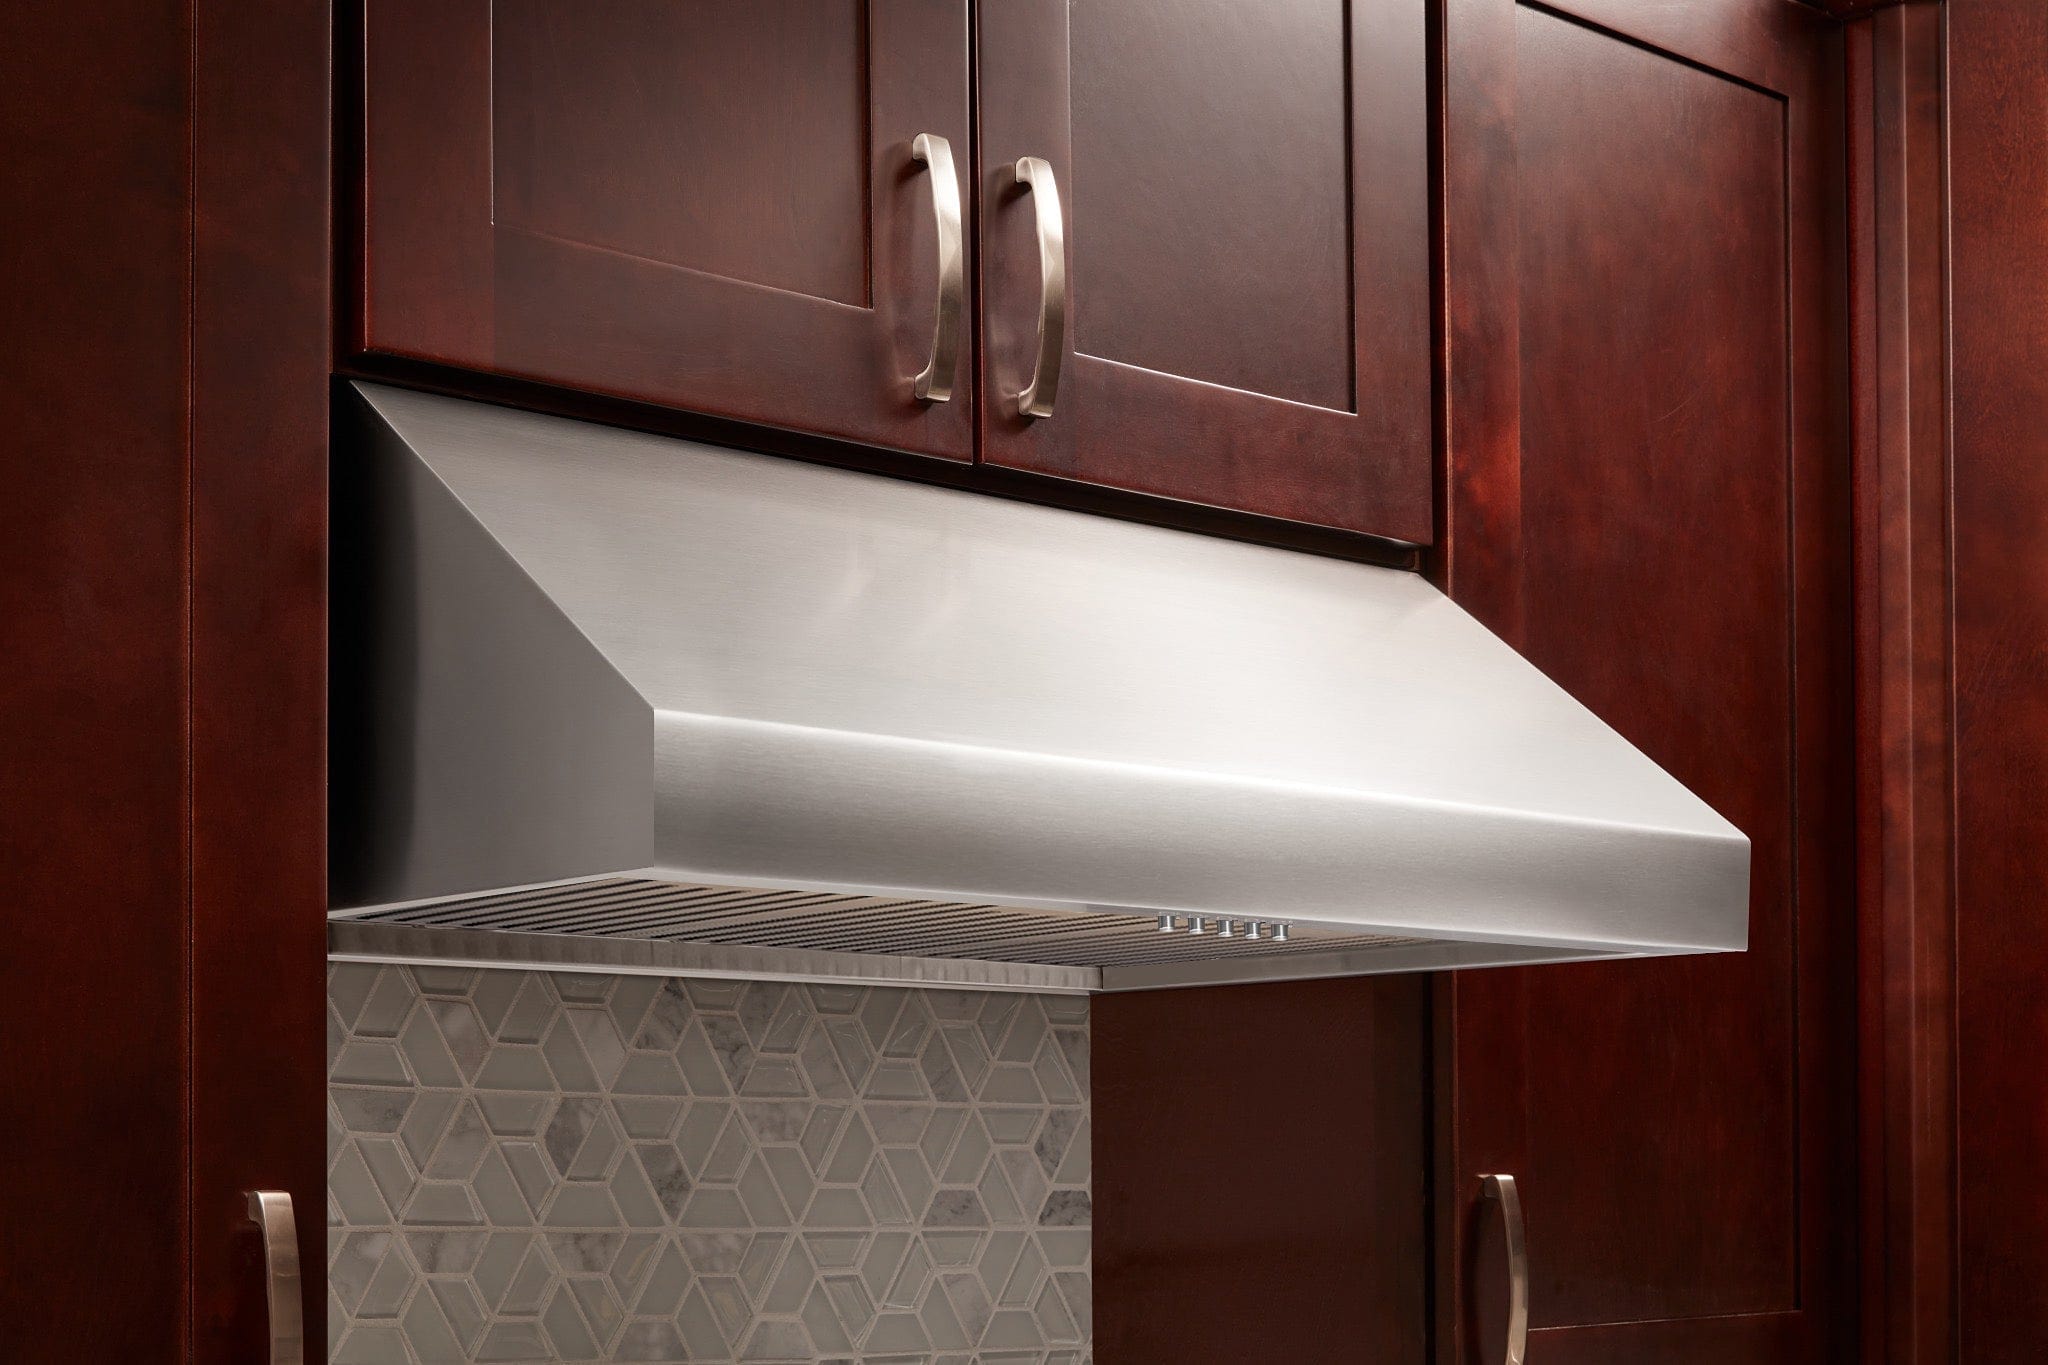 Thor Kitchen 30 Inch Under Cabinet LED Range Hood in Stainless Steel TRH3005 Range Hoods TRH3005 Luxury Appliances Direct